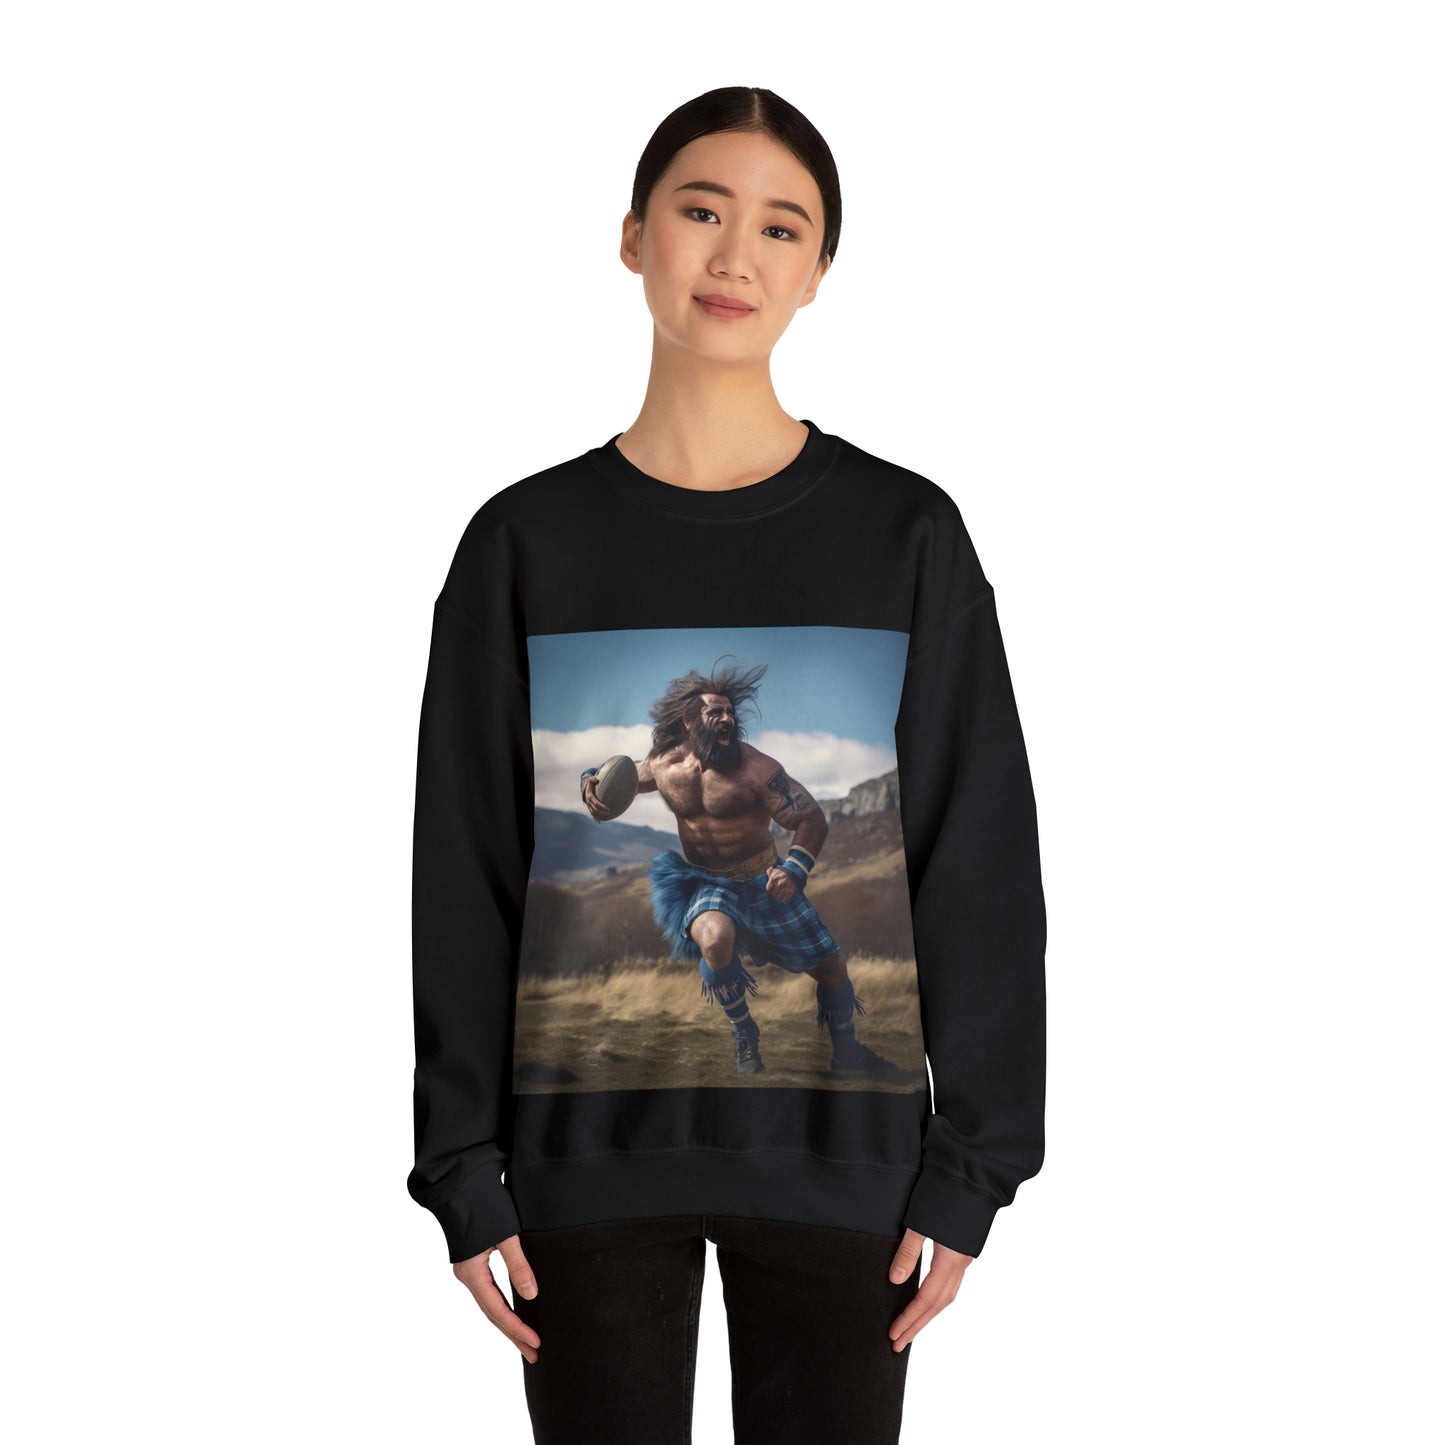 William Wallace - dark sweatshirts